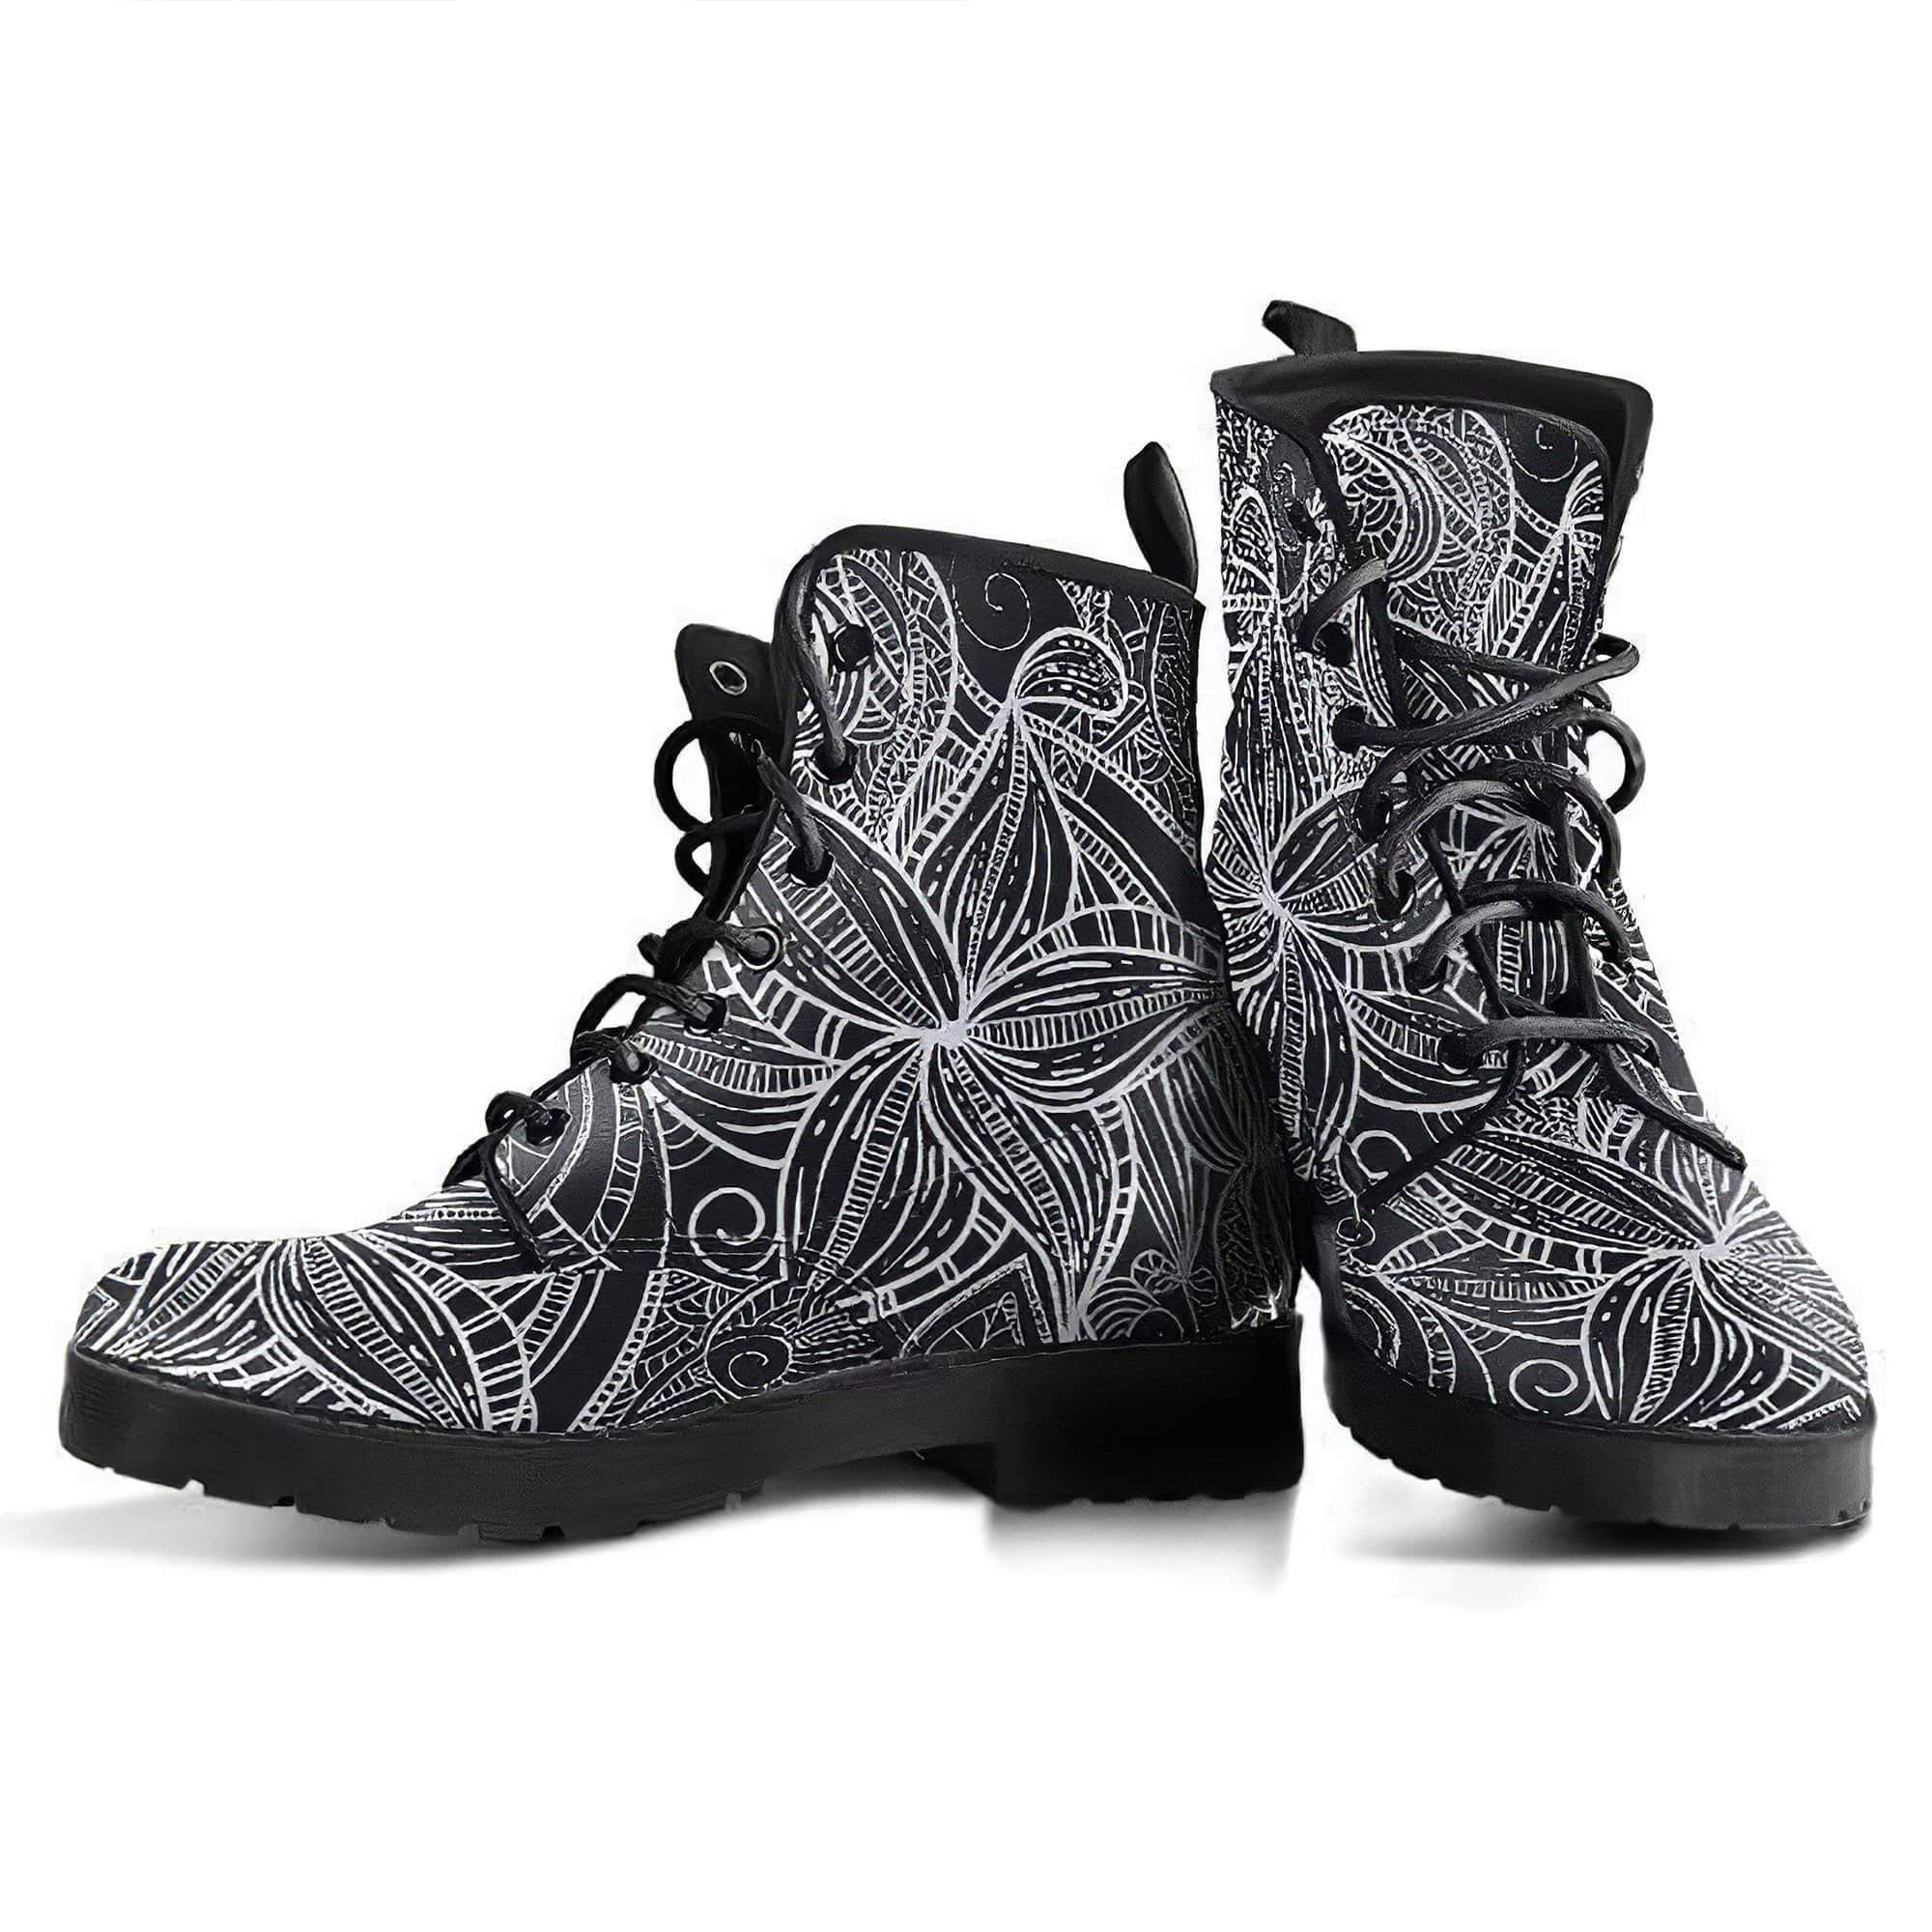 zen-women-s-boots-vegan-friendly-leather-women-s-leather-boots-12051991134269.jpg